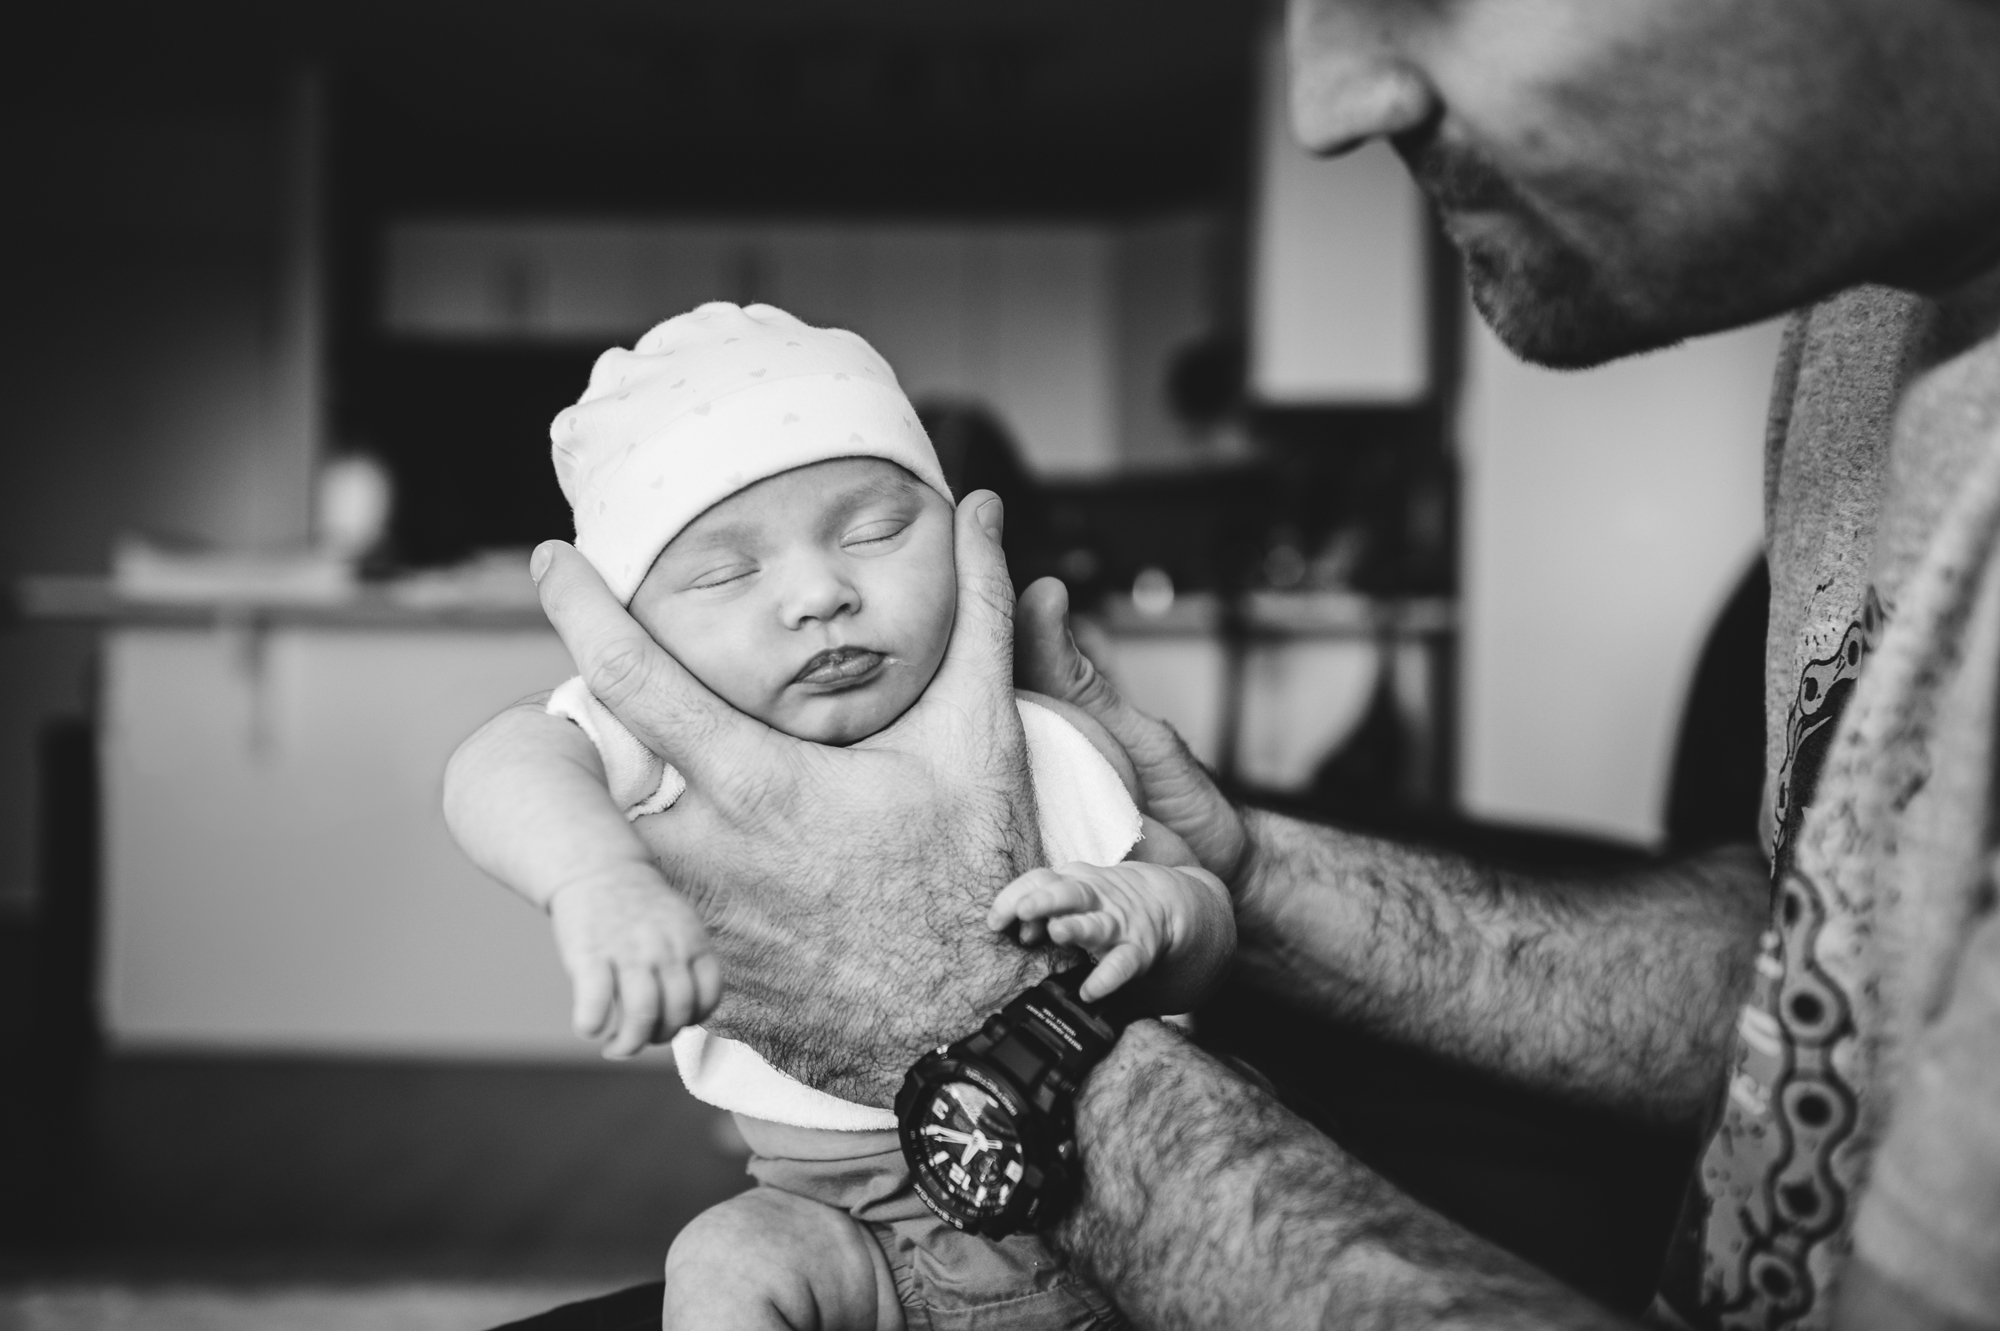 Sherwood Park Photographer. Taking Newborn photos in a small condo